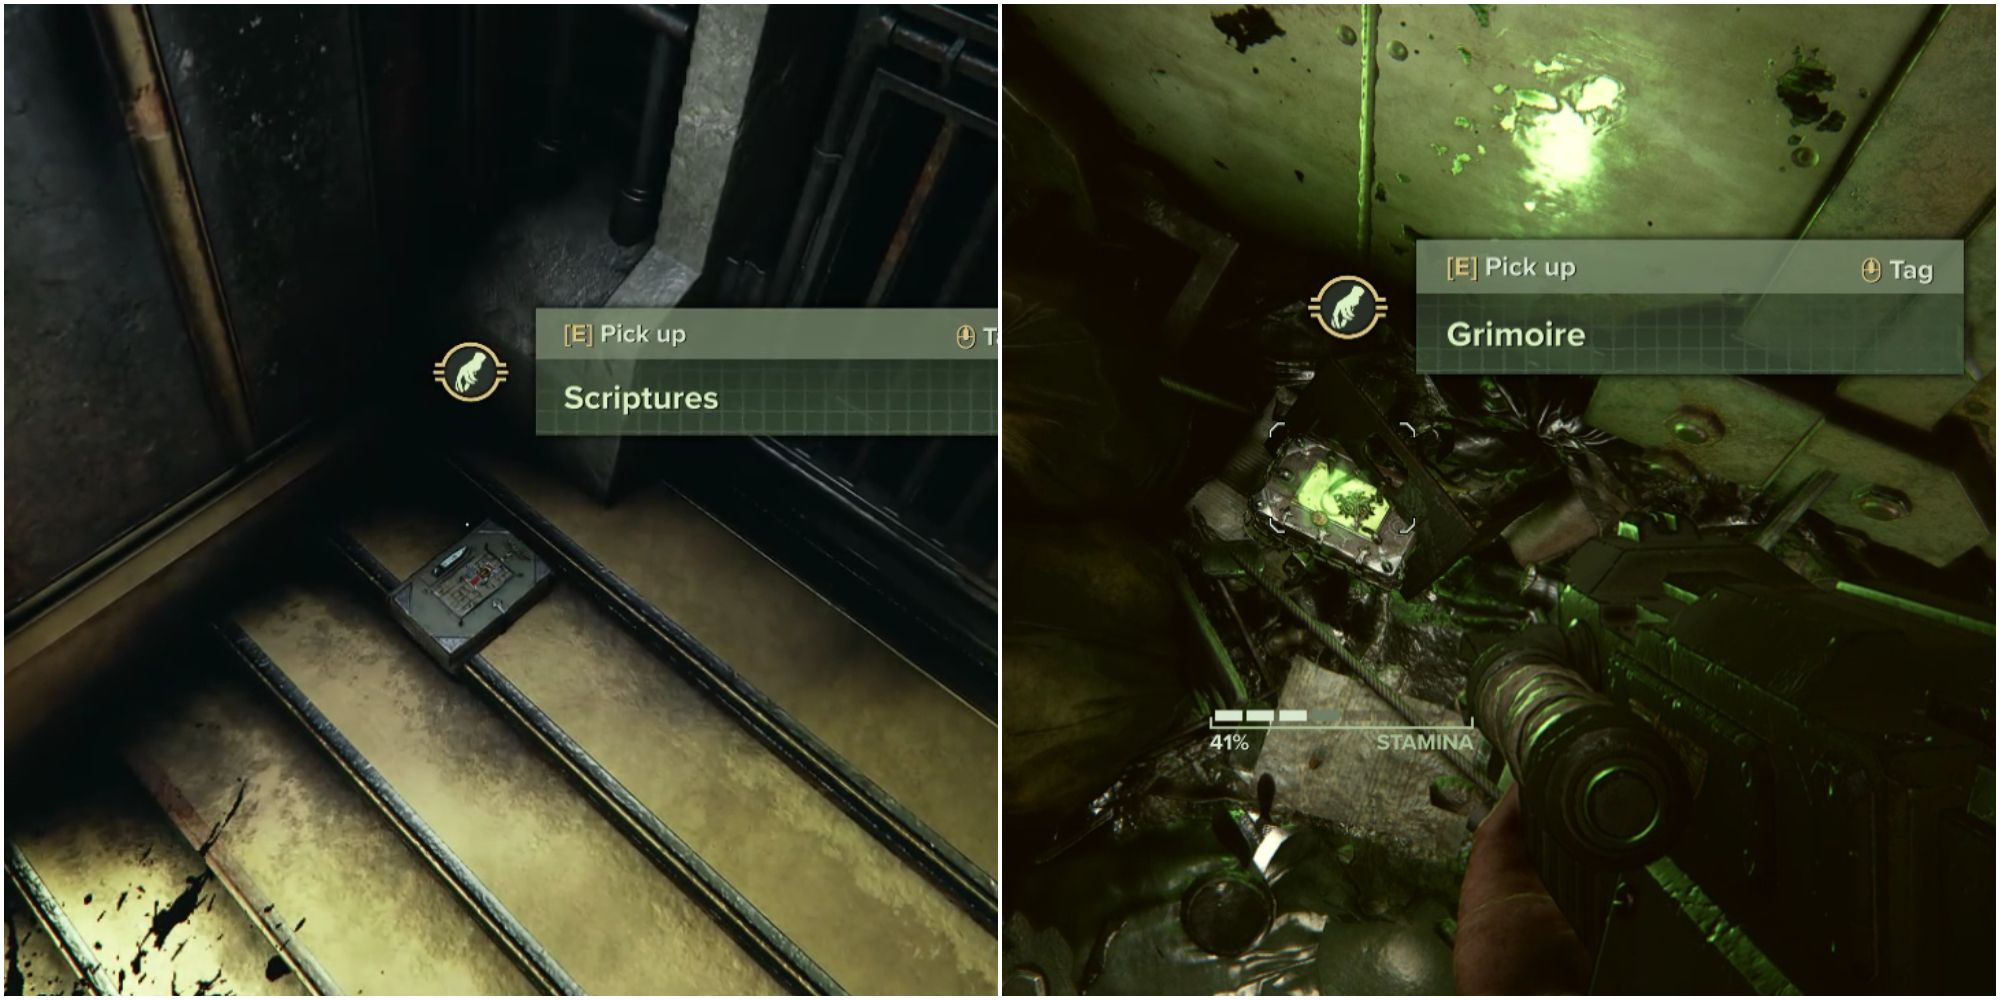 Side-by-side view of Grimoires and Scriptures in Warhammer 40K: Darktide